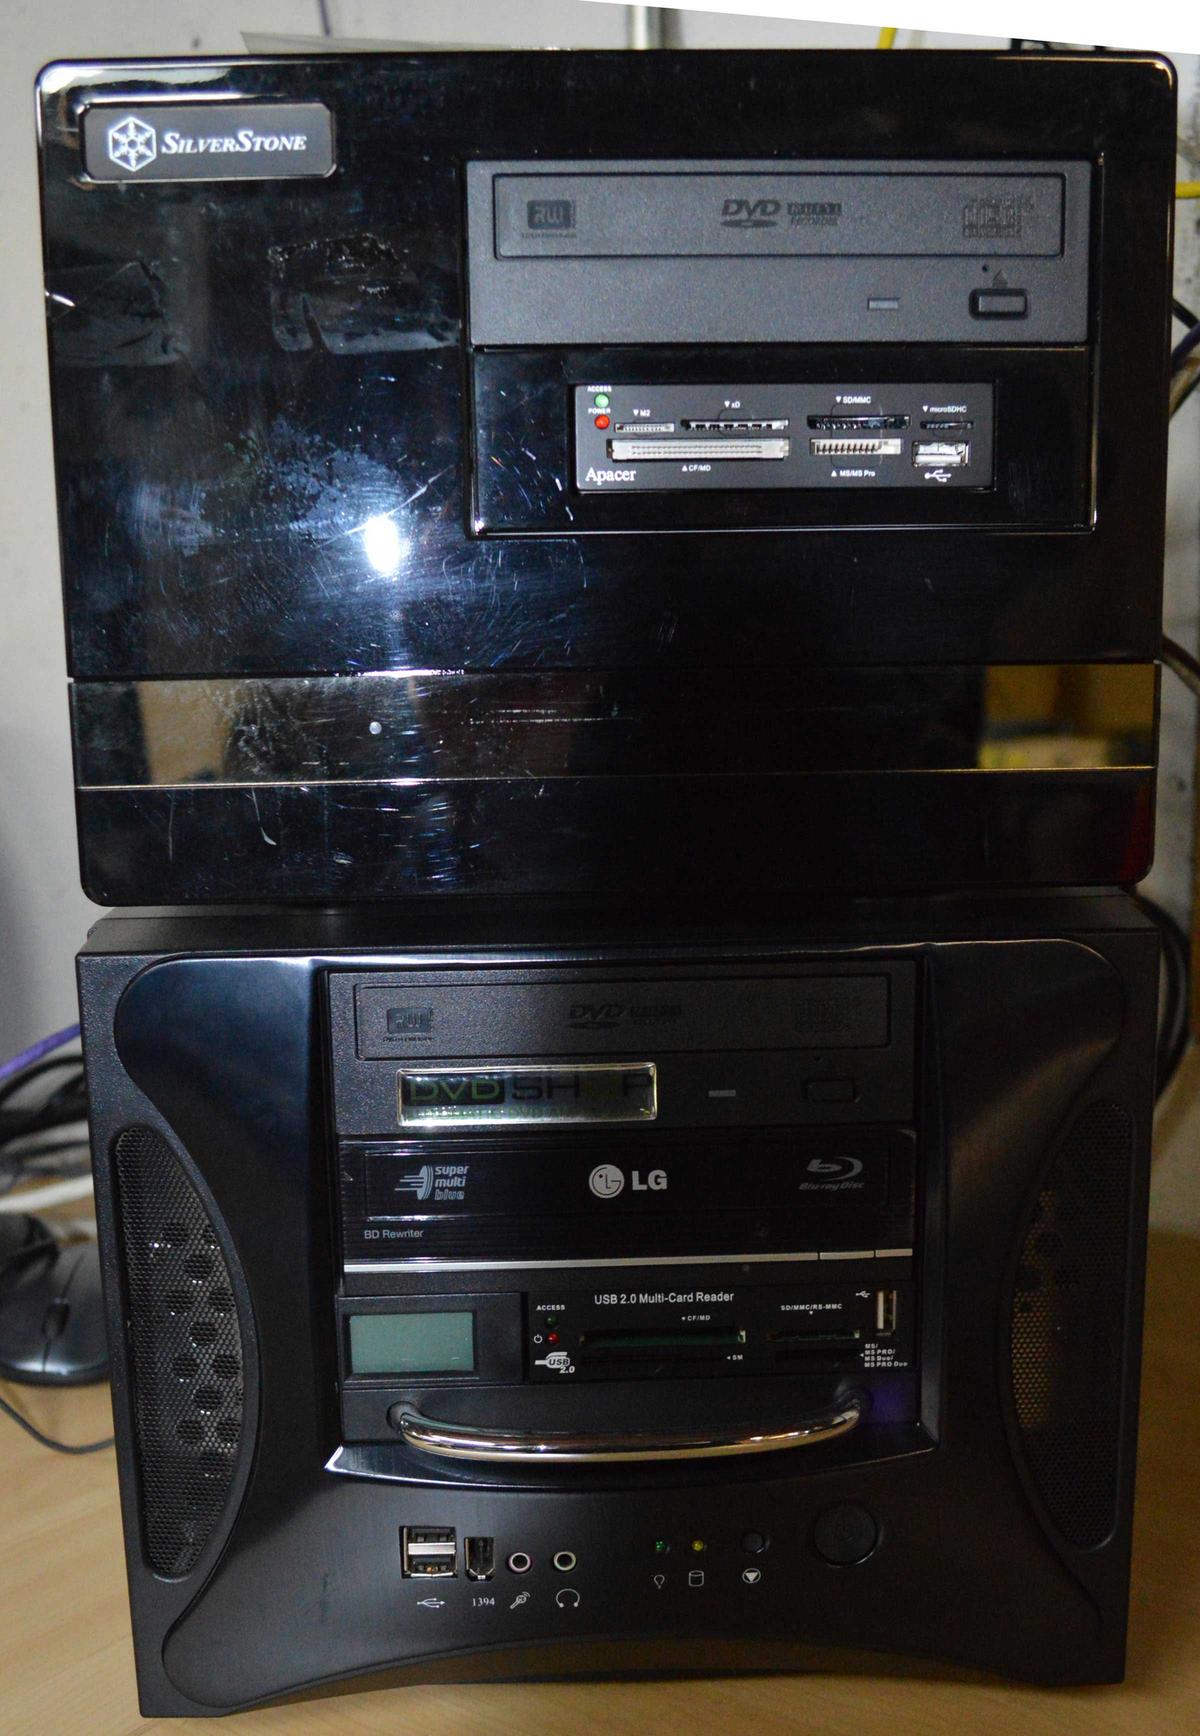 Lot: Silverstone DVD Multi-Recorder & LG DVD Multi-Recorder